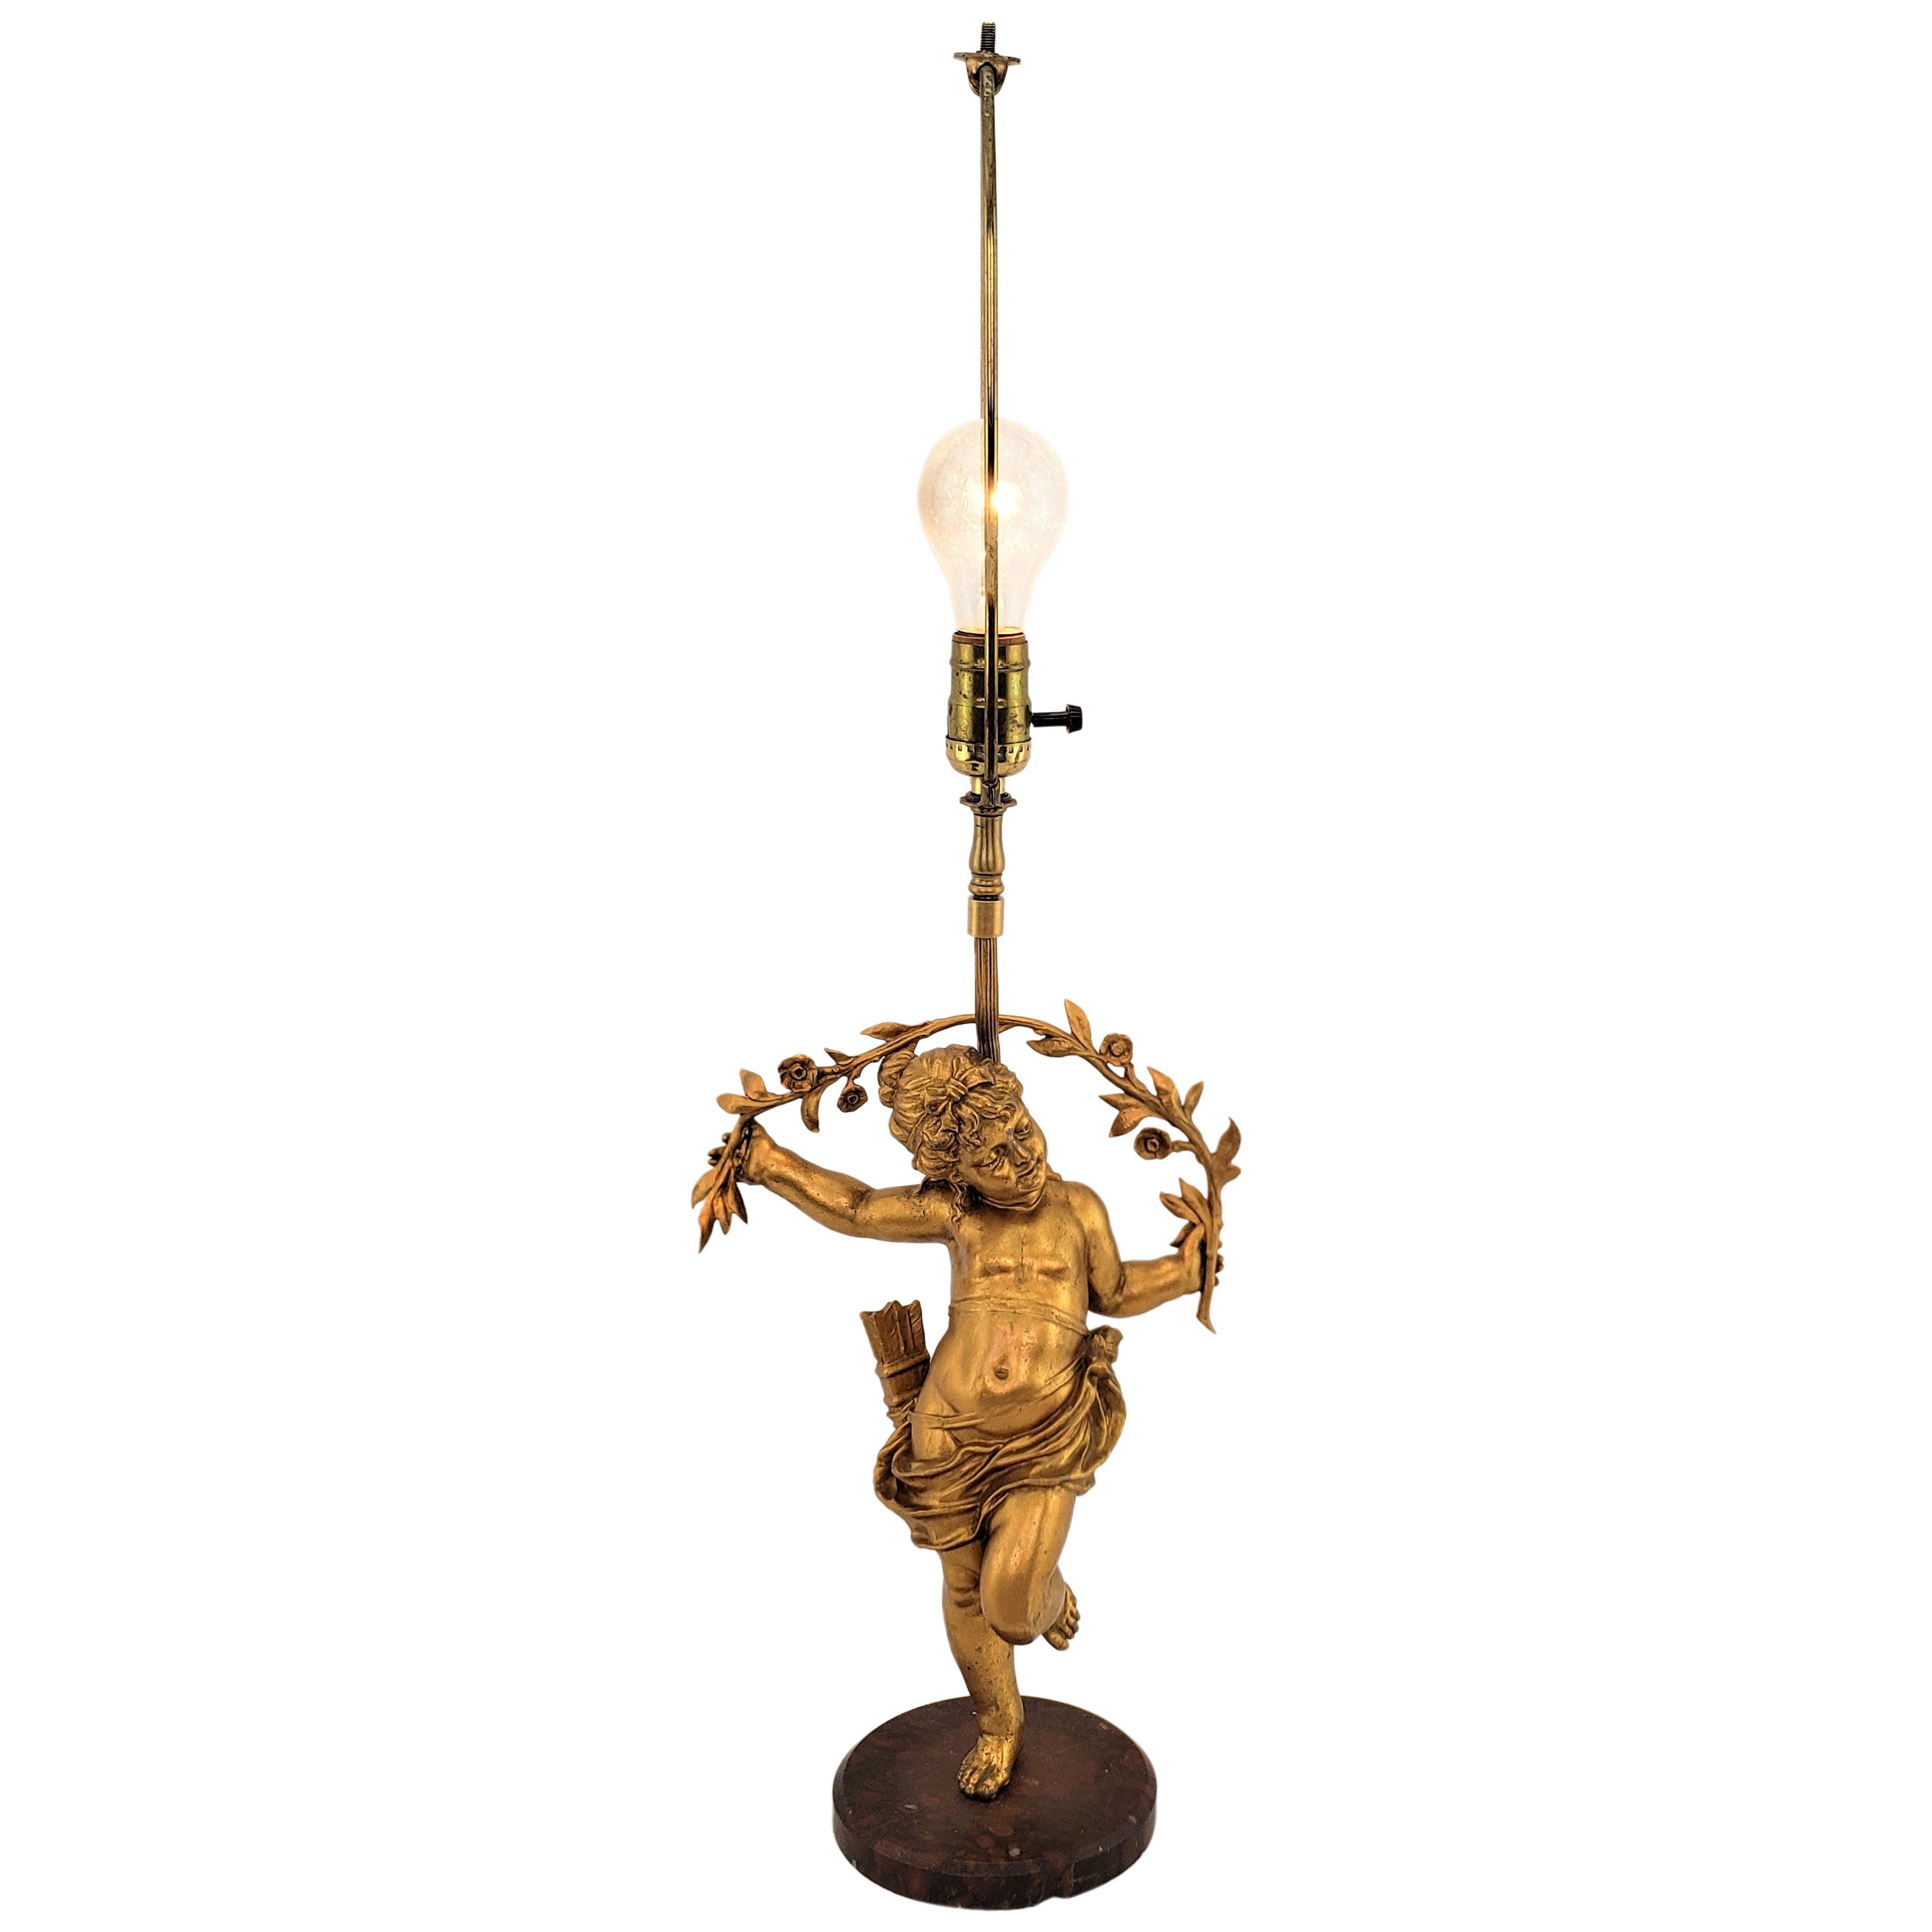 Antique Ornately Cast & Gilt Finished Sculptural Cherub Table Lamp